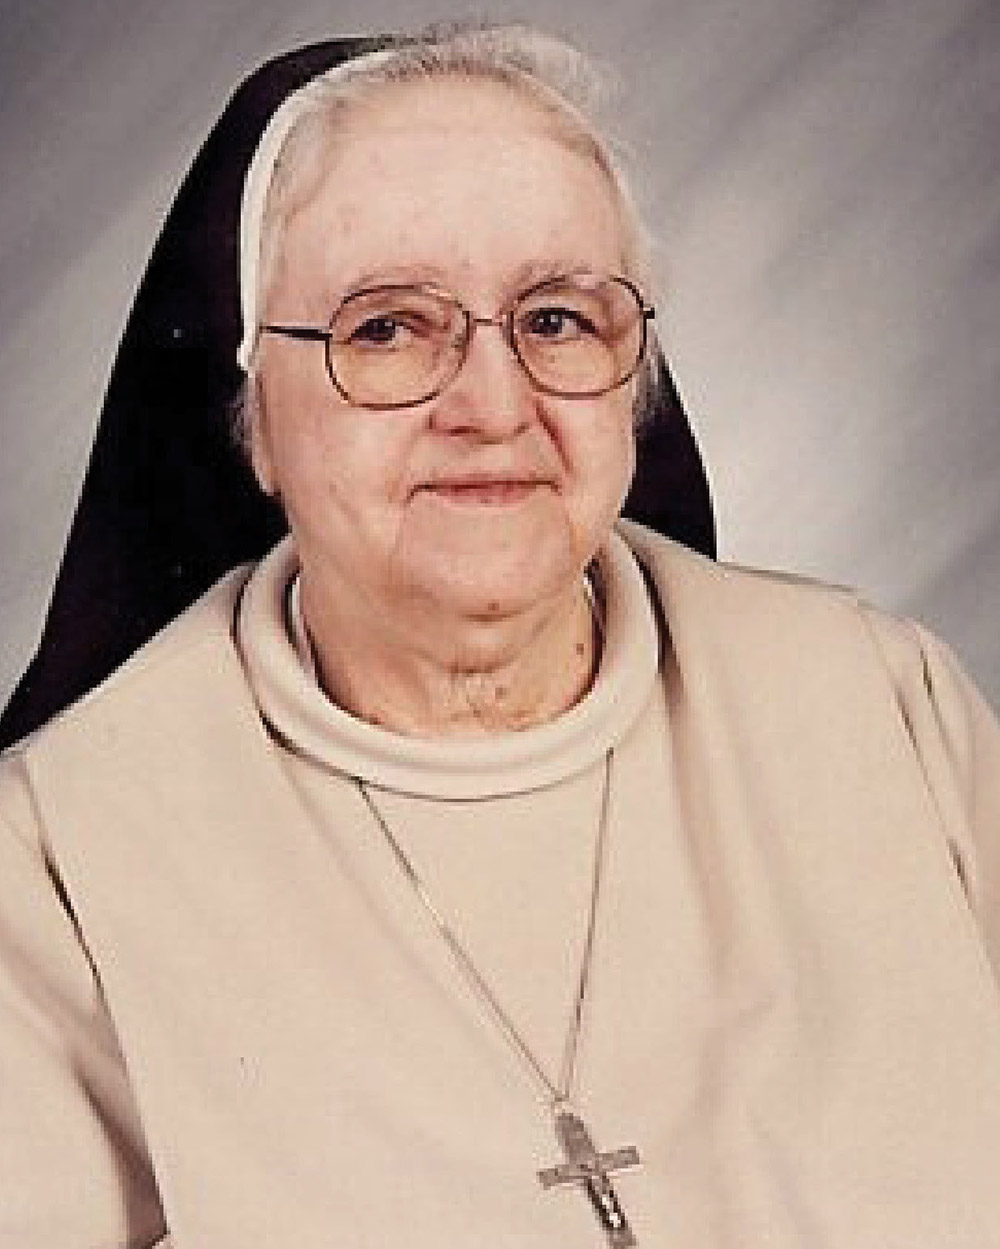 Sister-M.-Ladislas-Oleszkowicz-OSF-1916-1997